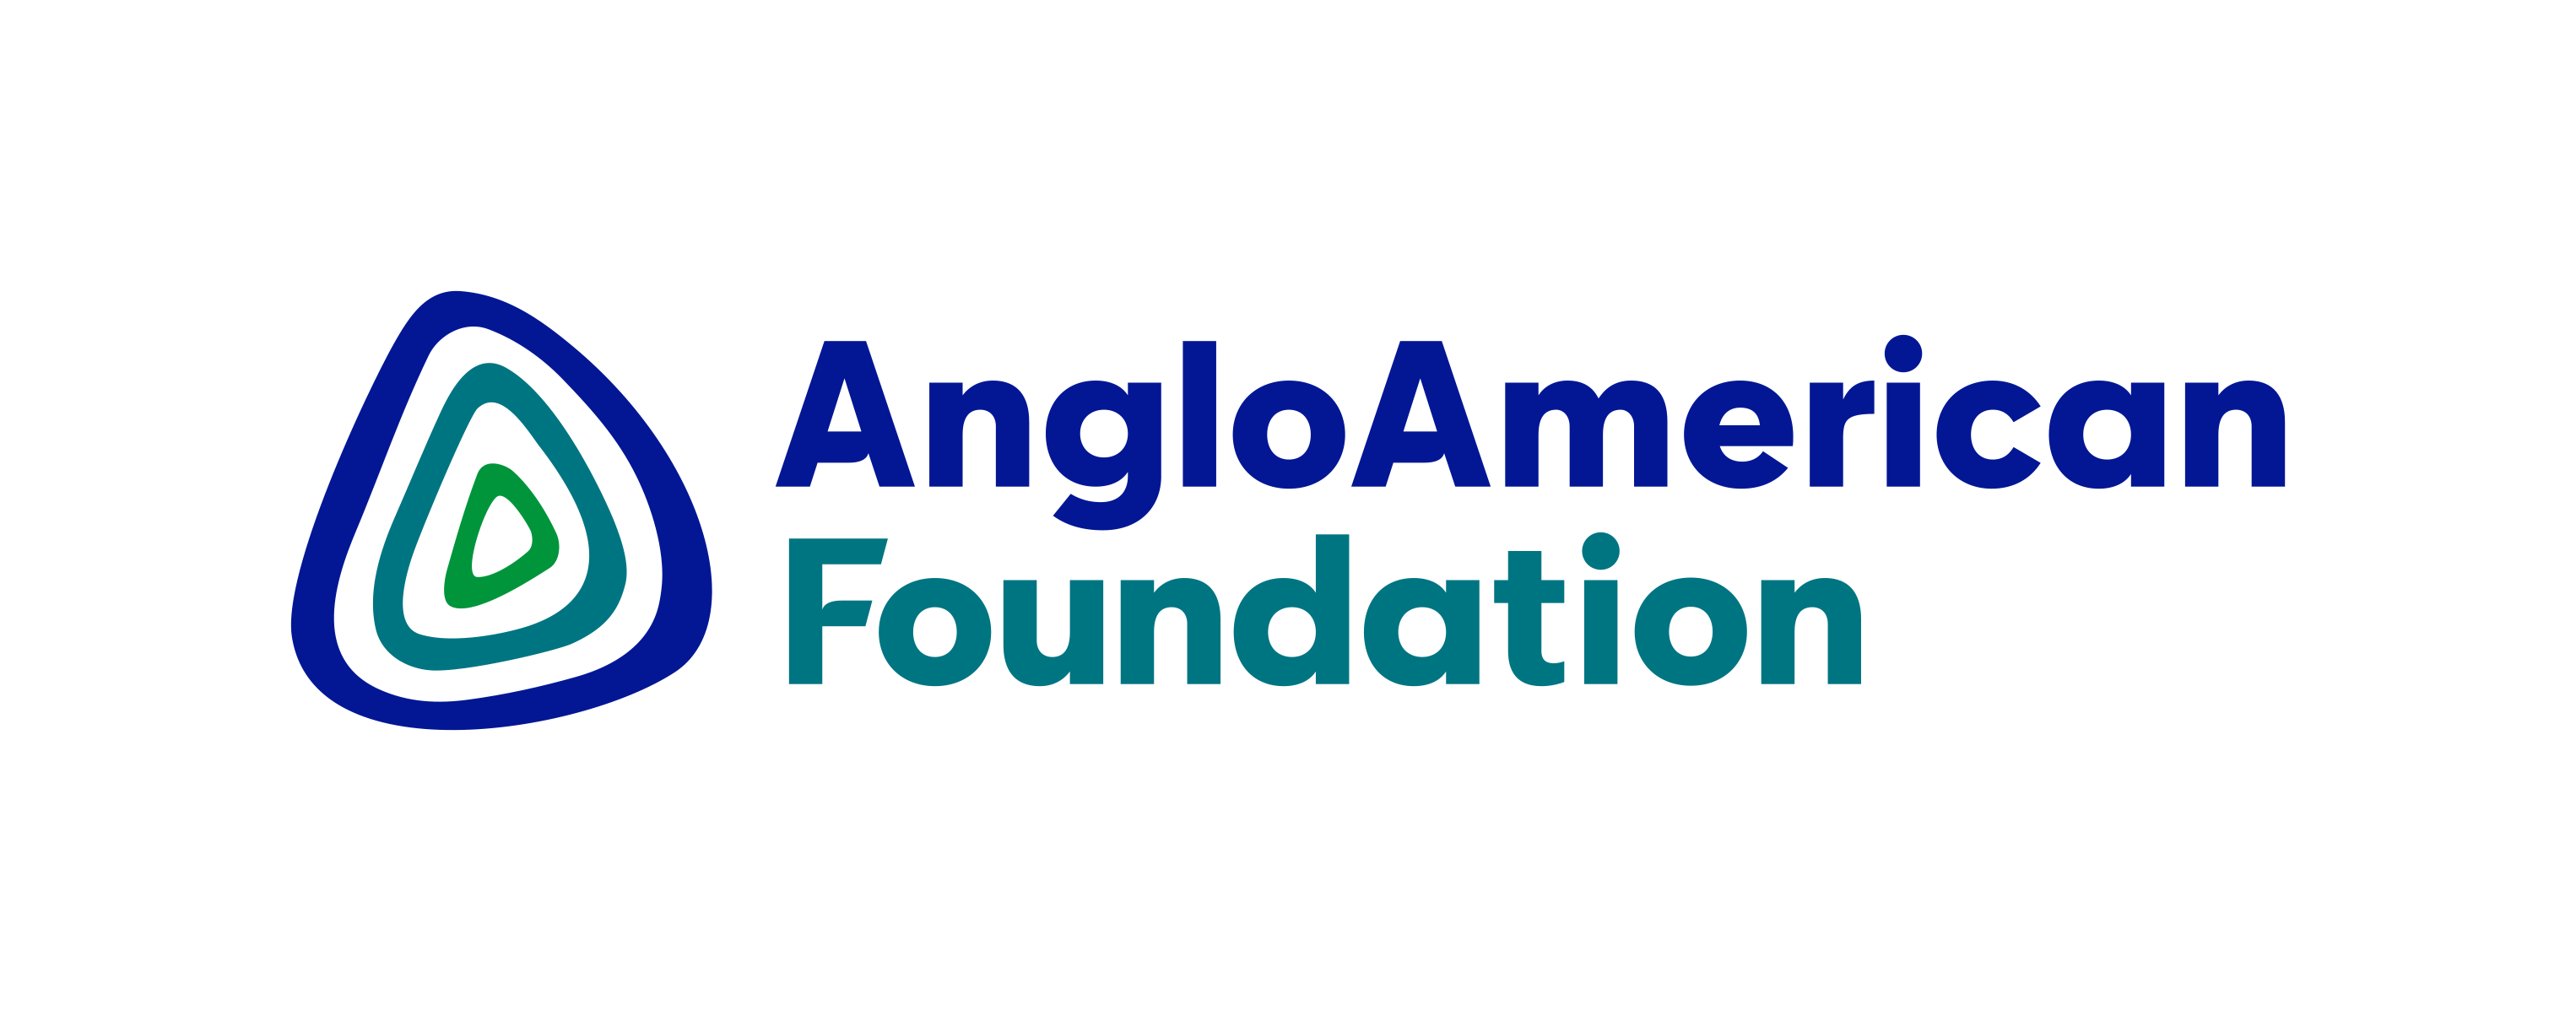 Anglo_American_Foundation_Identity_RGB (1)